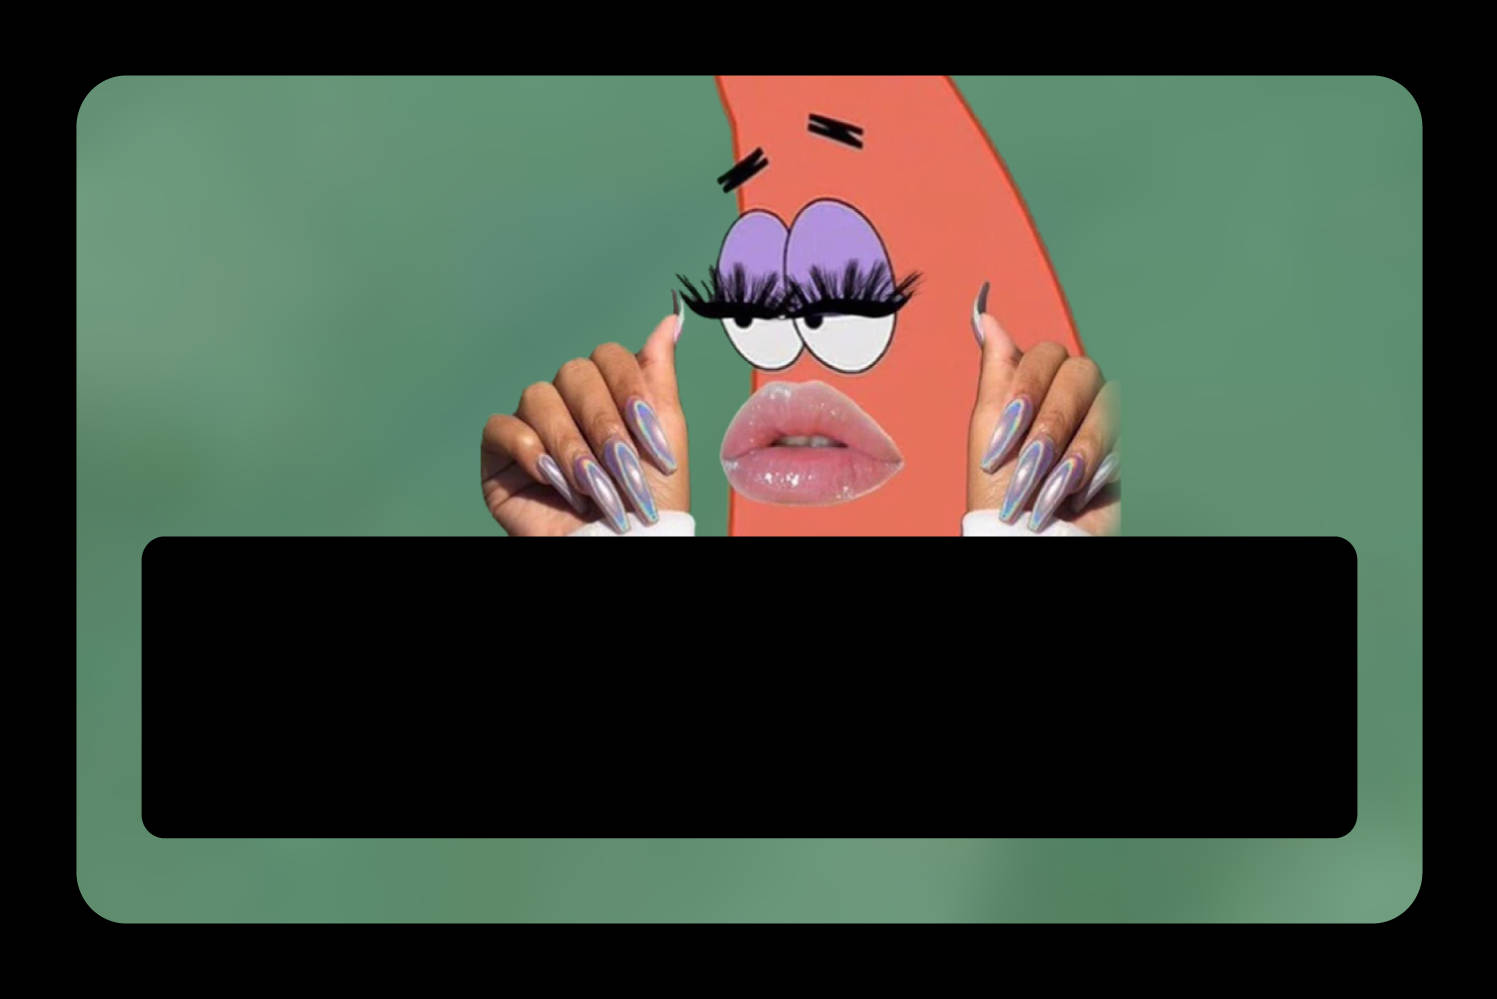 A Cartoon Spongebob Squarepants Character With A Pink Face Wallpaper